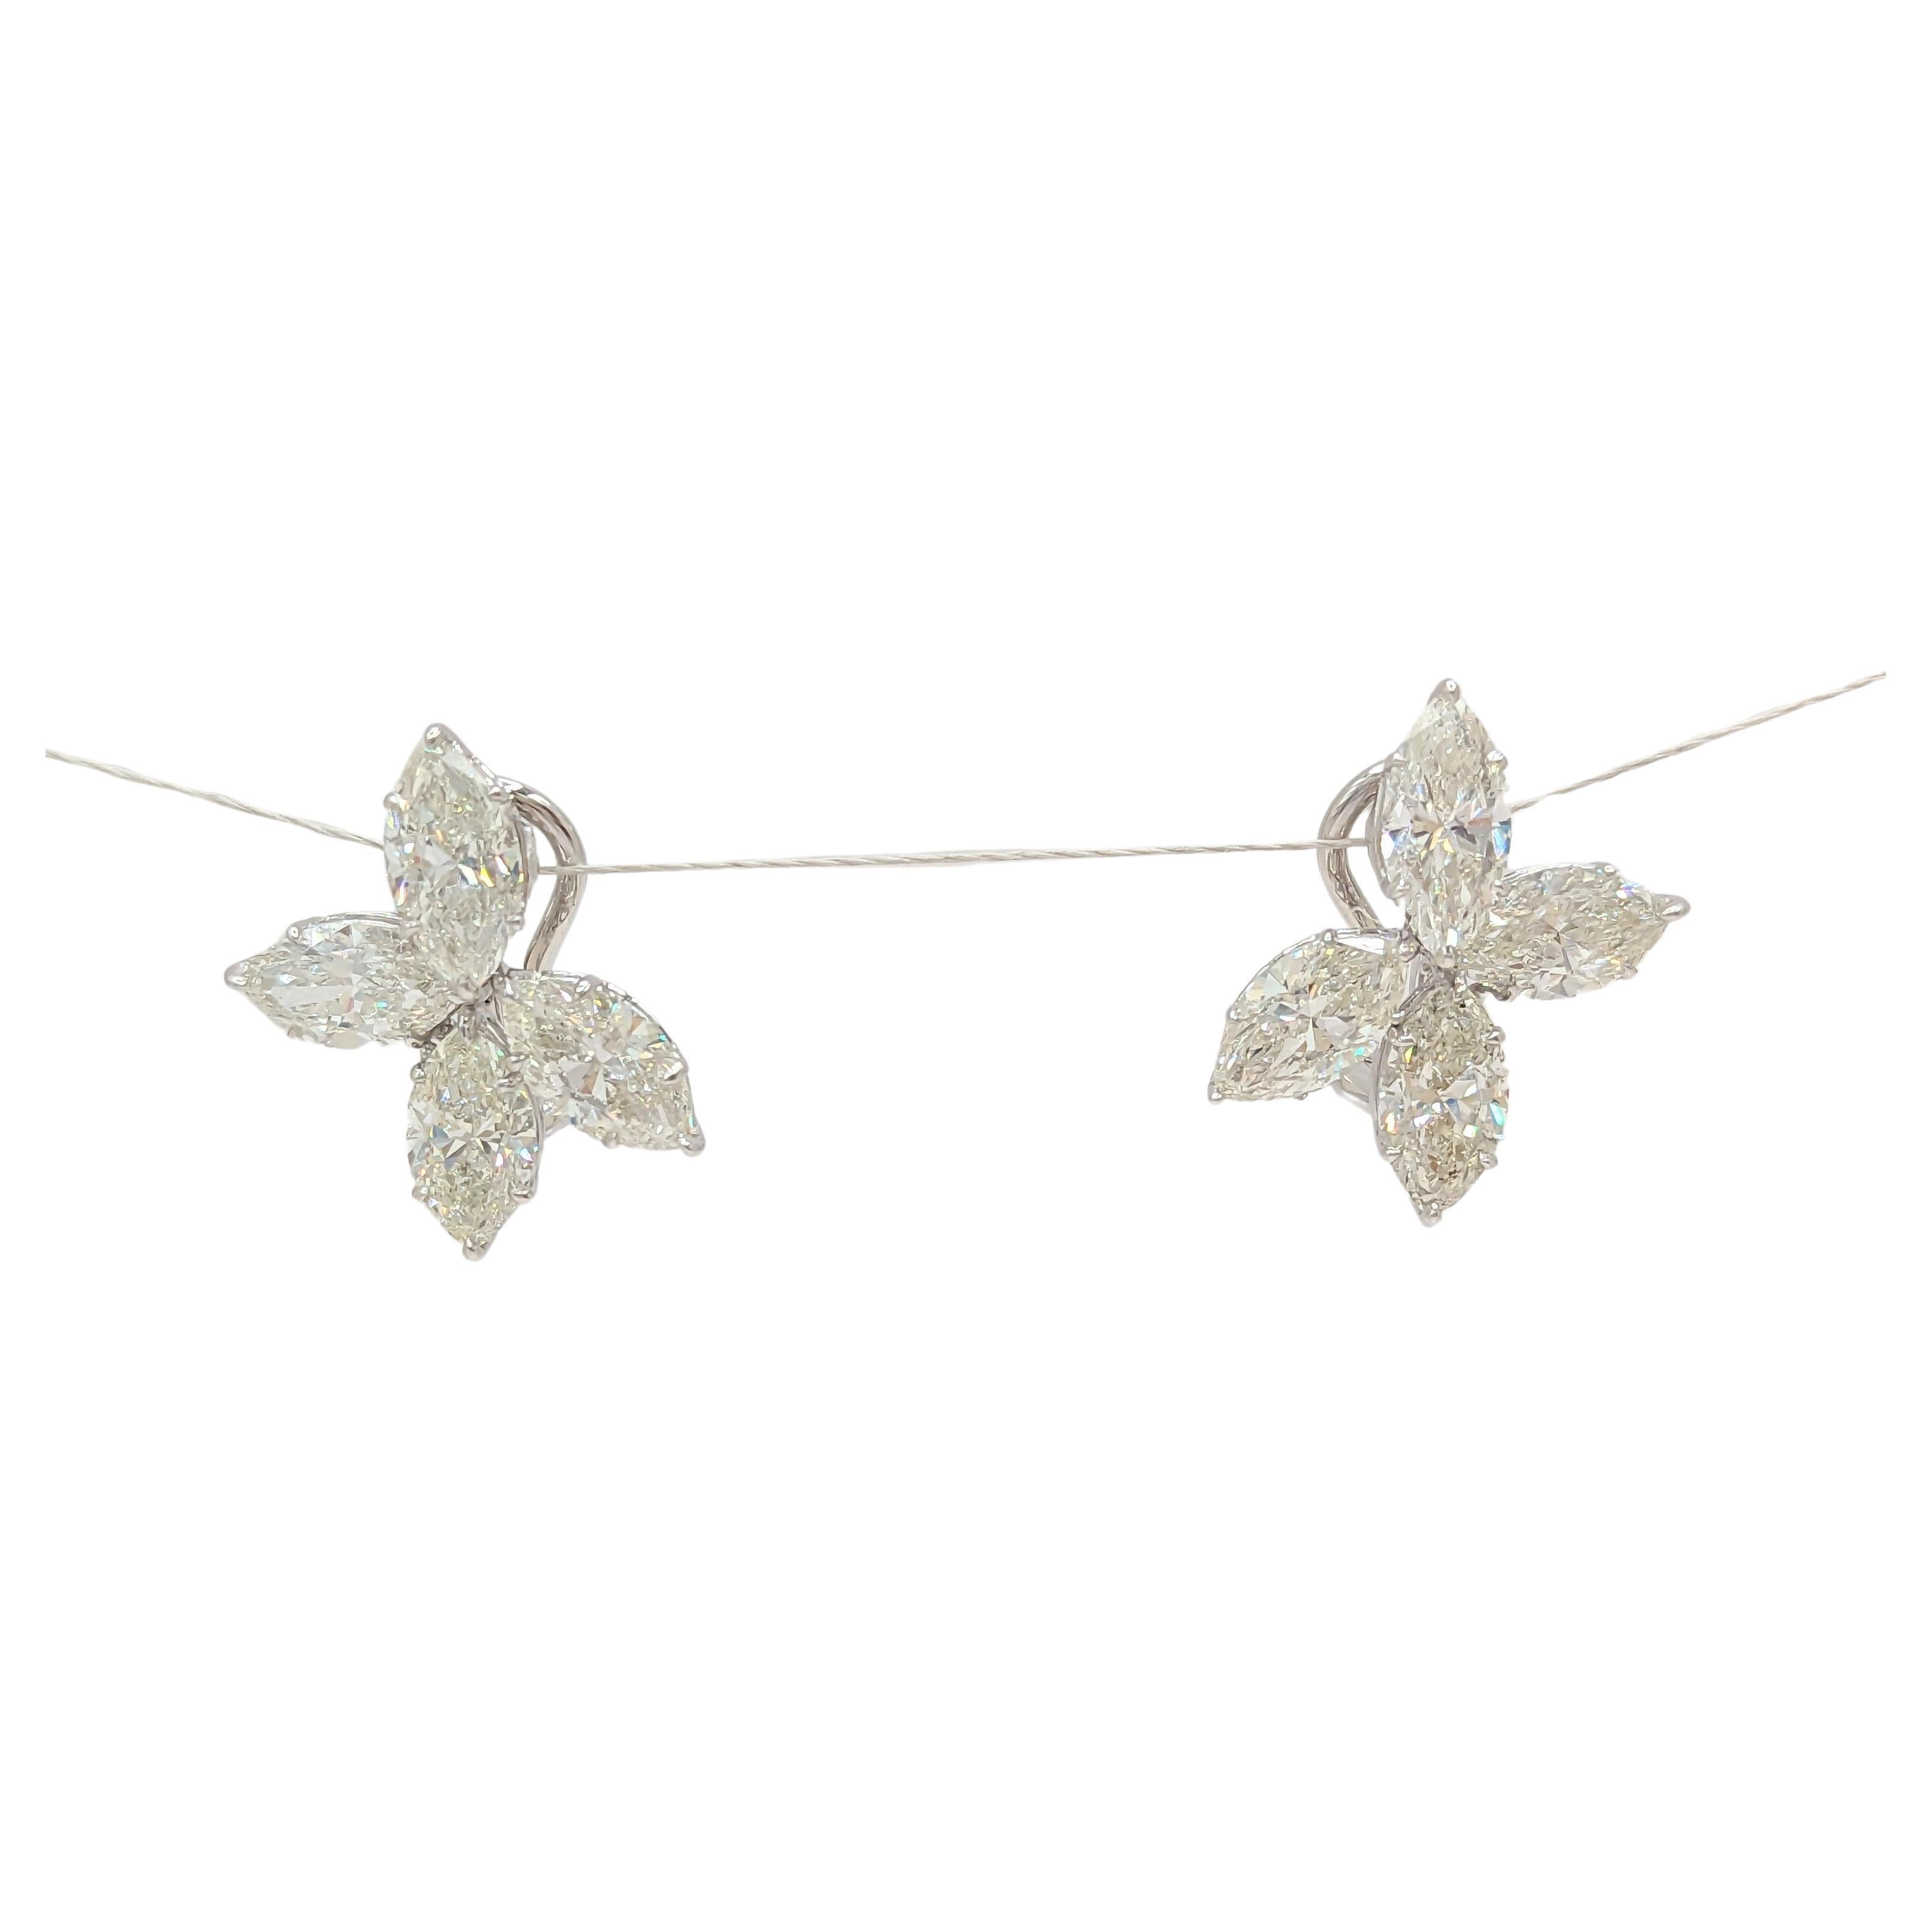 GIA White Diamond Marquise Cluster Earrings in 18K White Gold